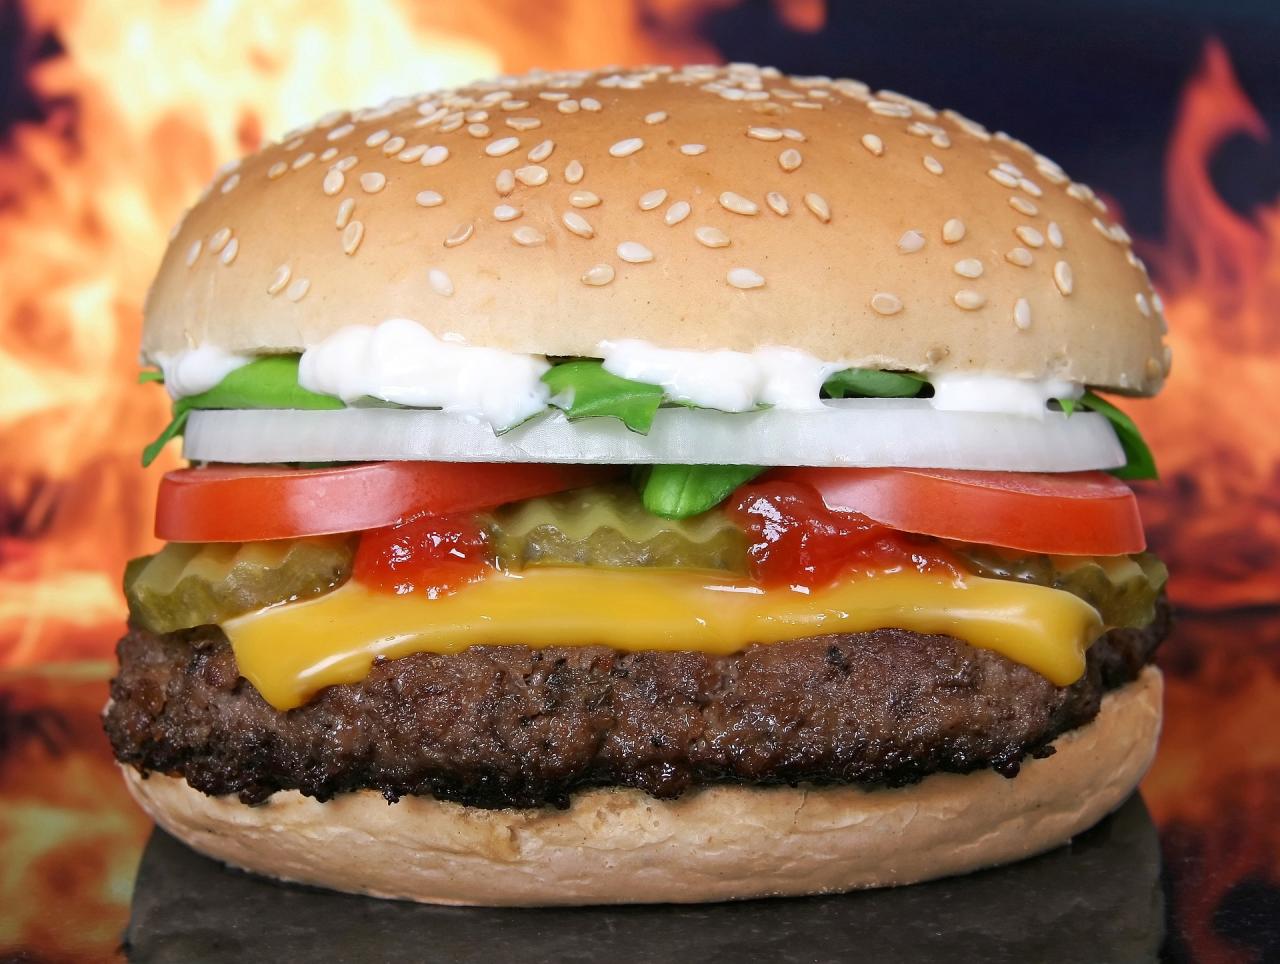 delicious looking hamburger